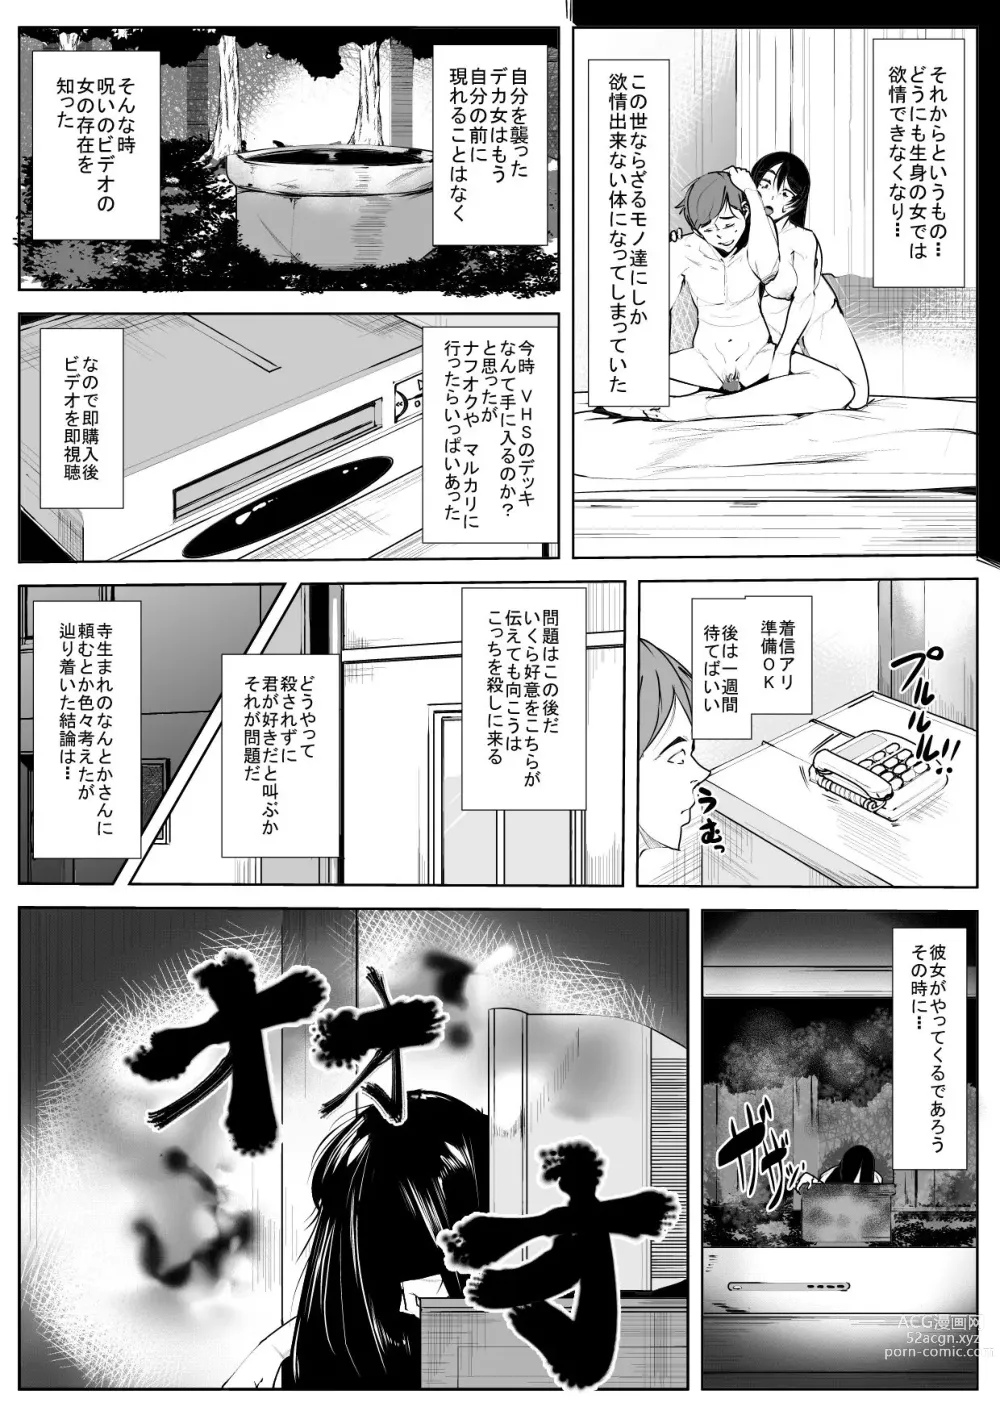 Page 6 of doujinshi Sadako